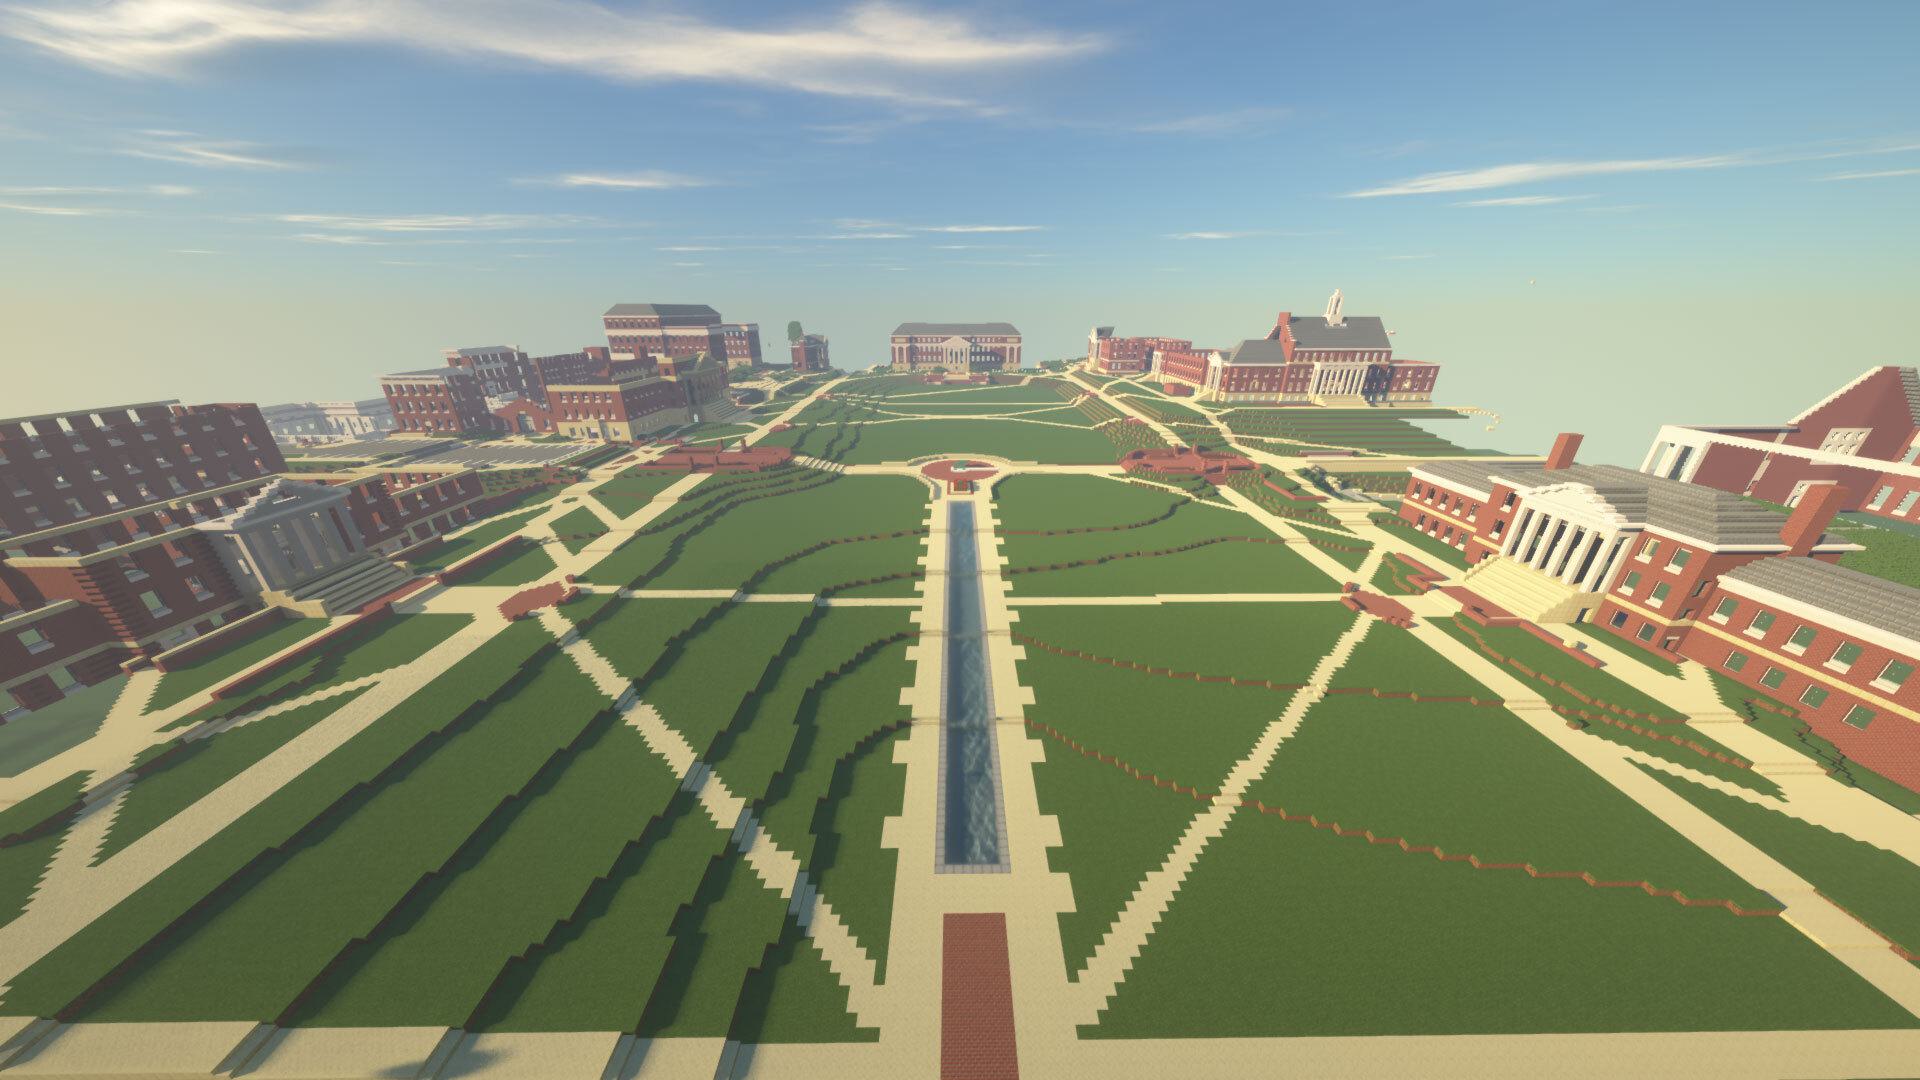 Minecraft version of McKeldin Mall